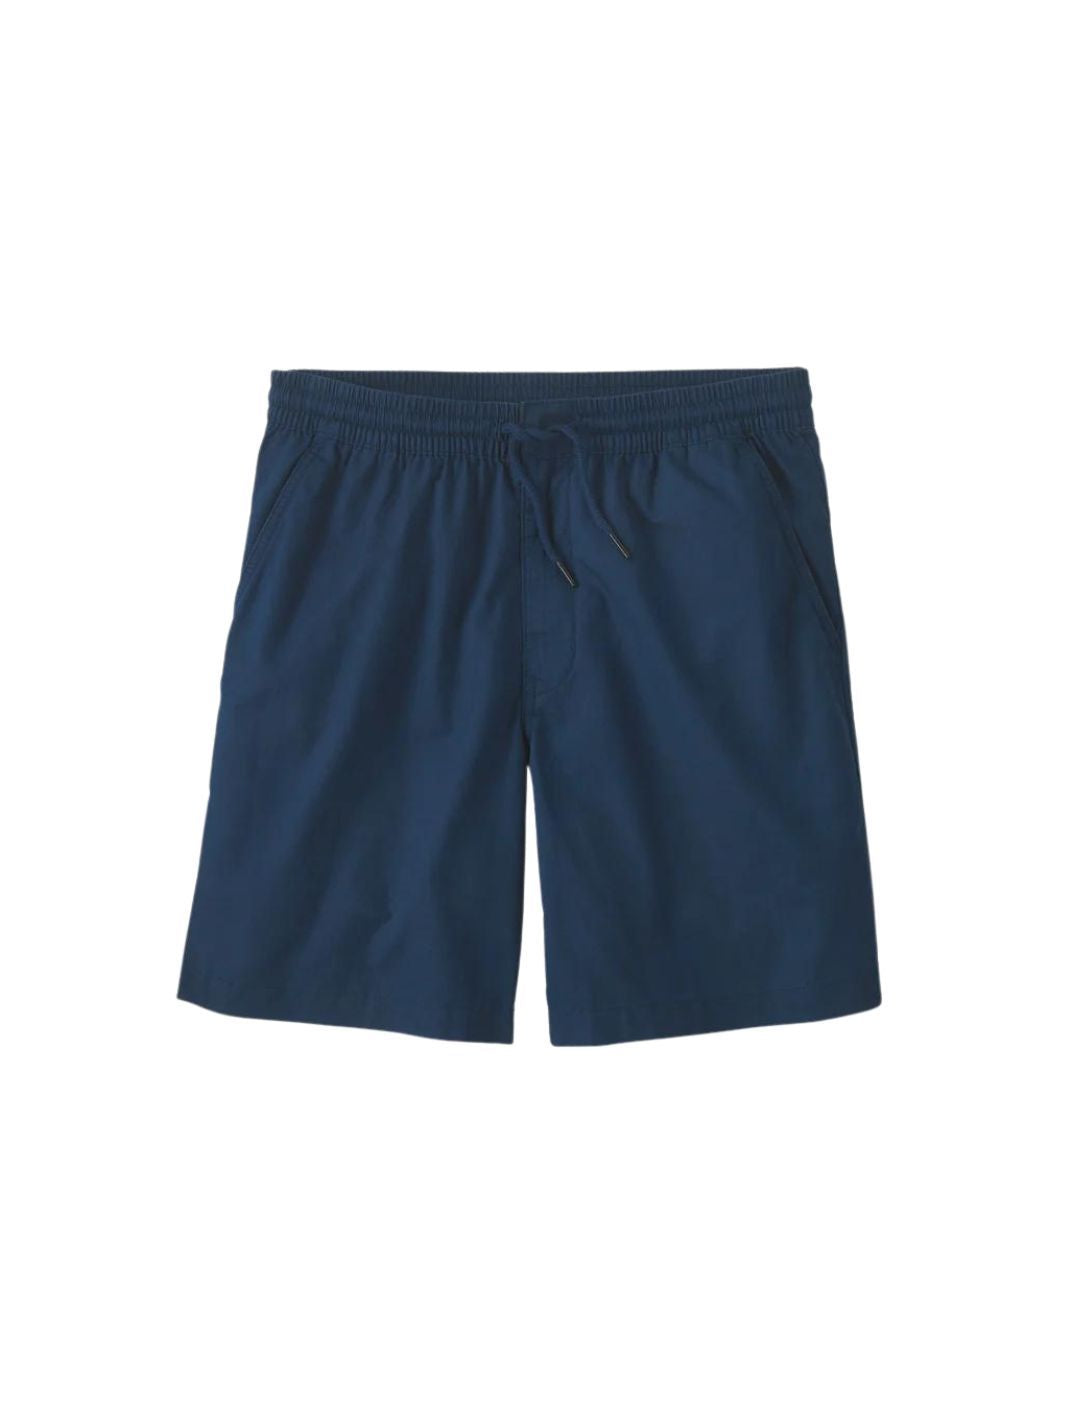 Patagonia Shorts Shorts | M's LW All-Wear Hemp Volly Tidepool Blue